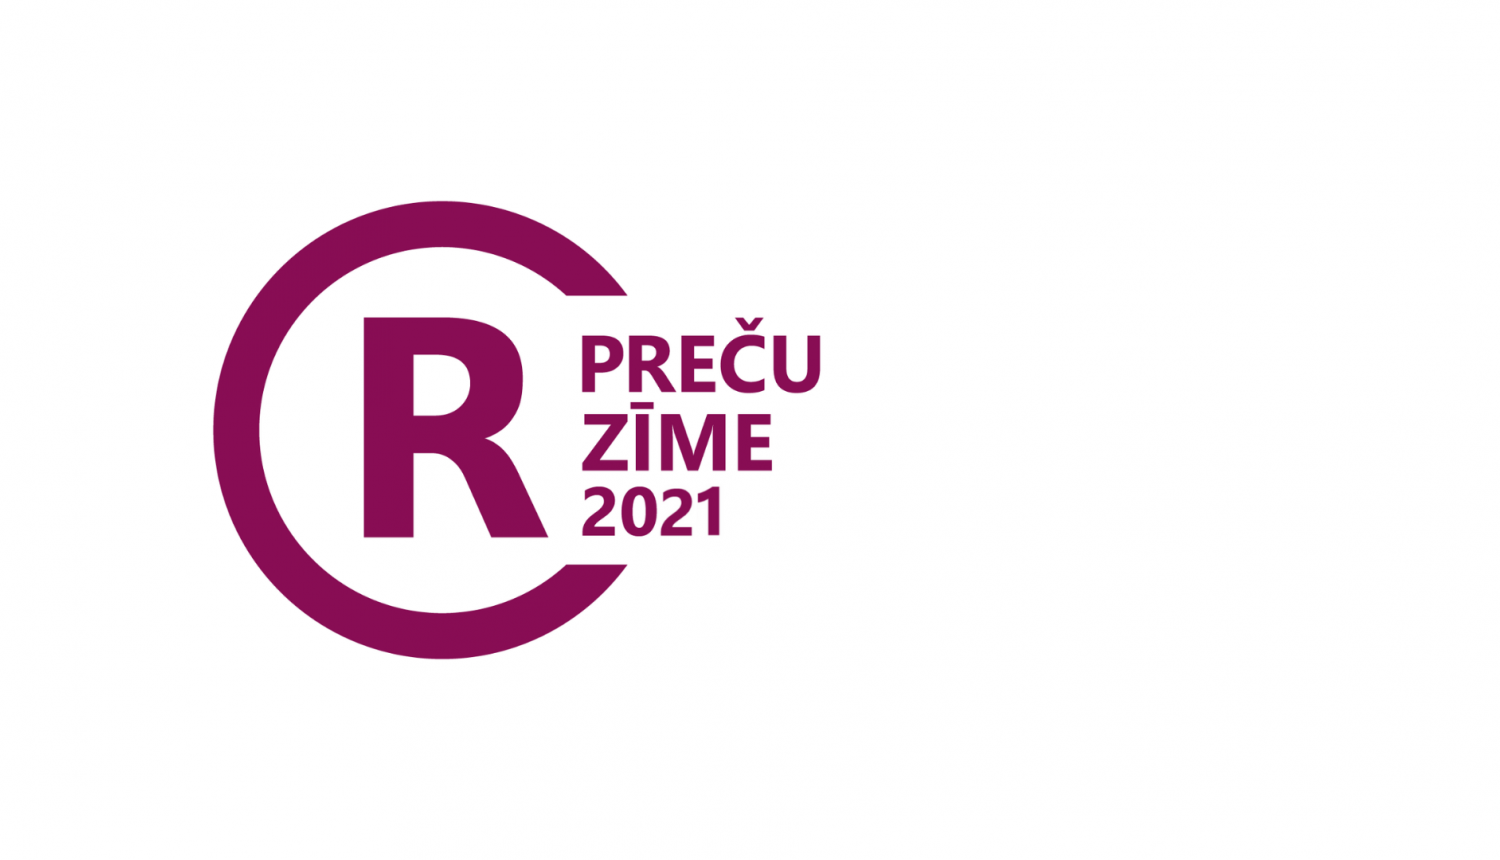 GPZ 2021 logo